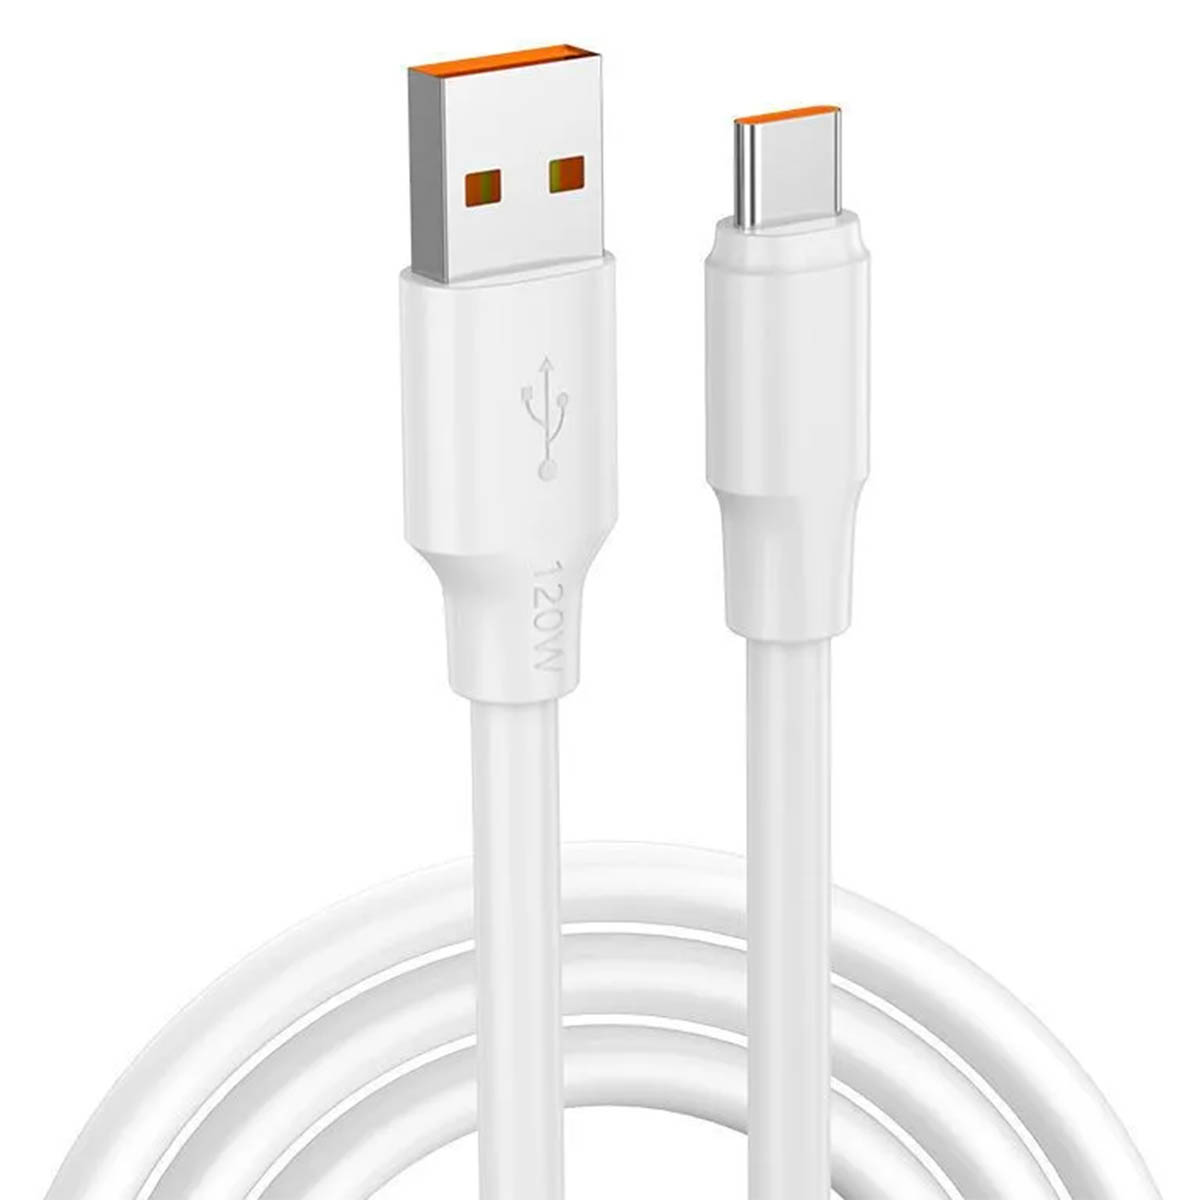 USB Дата кабель MRM G12, Type-C, силикон, длина 1 метр, цвет белый